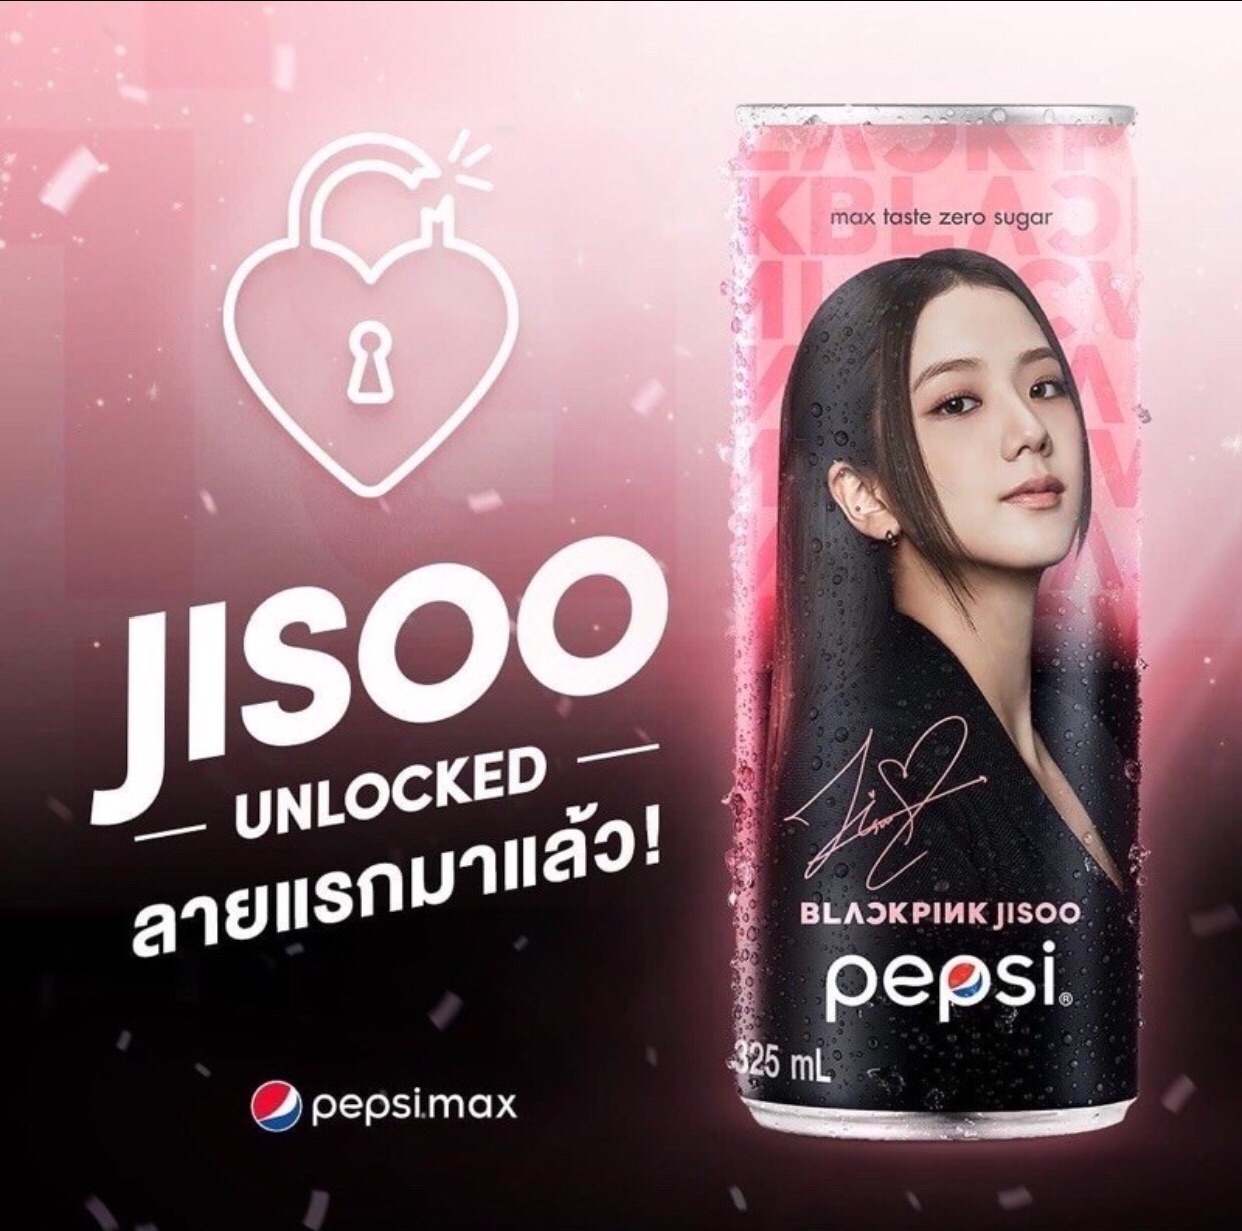 Pepsi X Blackpink no sugar #Jisoo 245 ml. (แพ็คสินค้าอย่างดี)